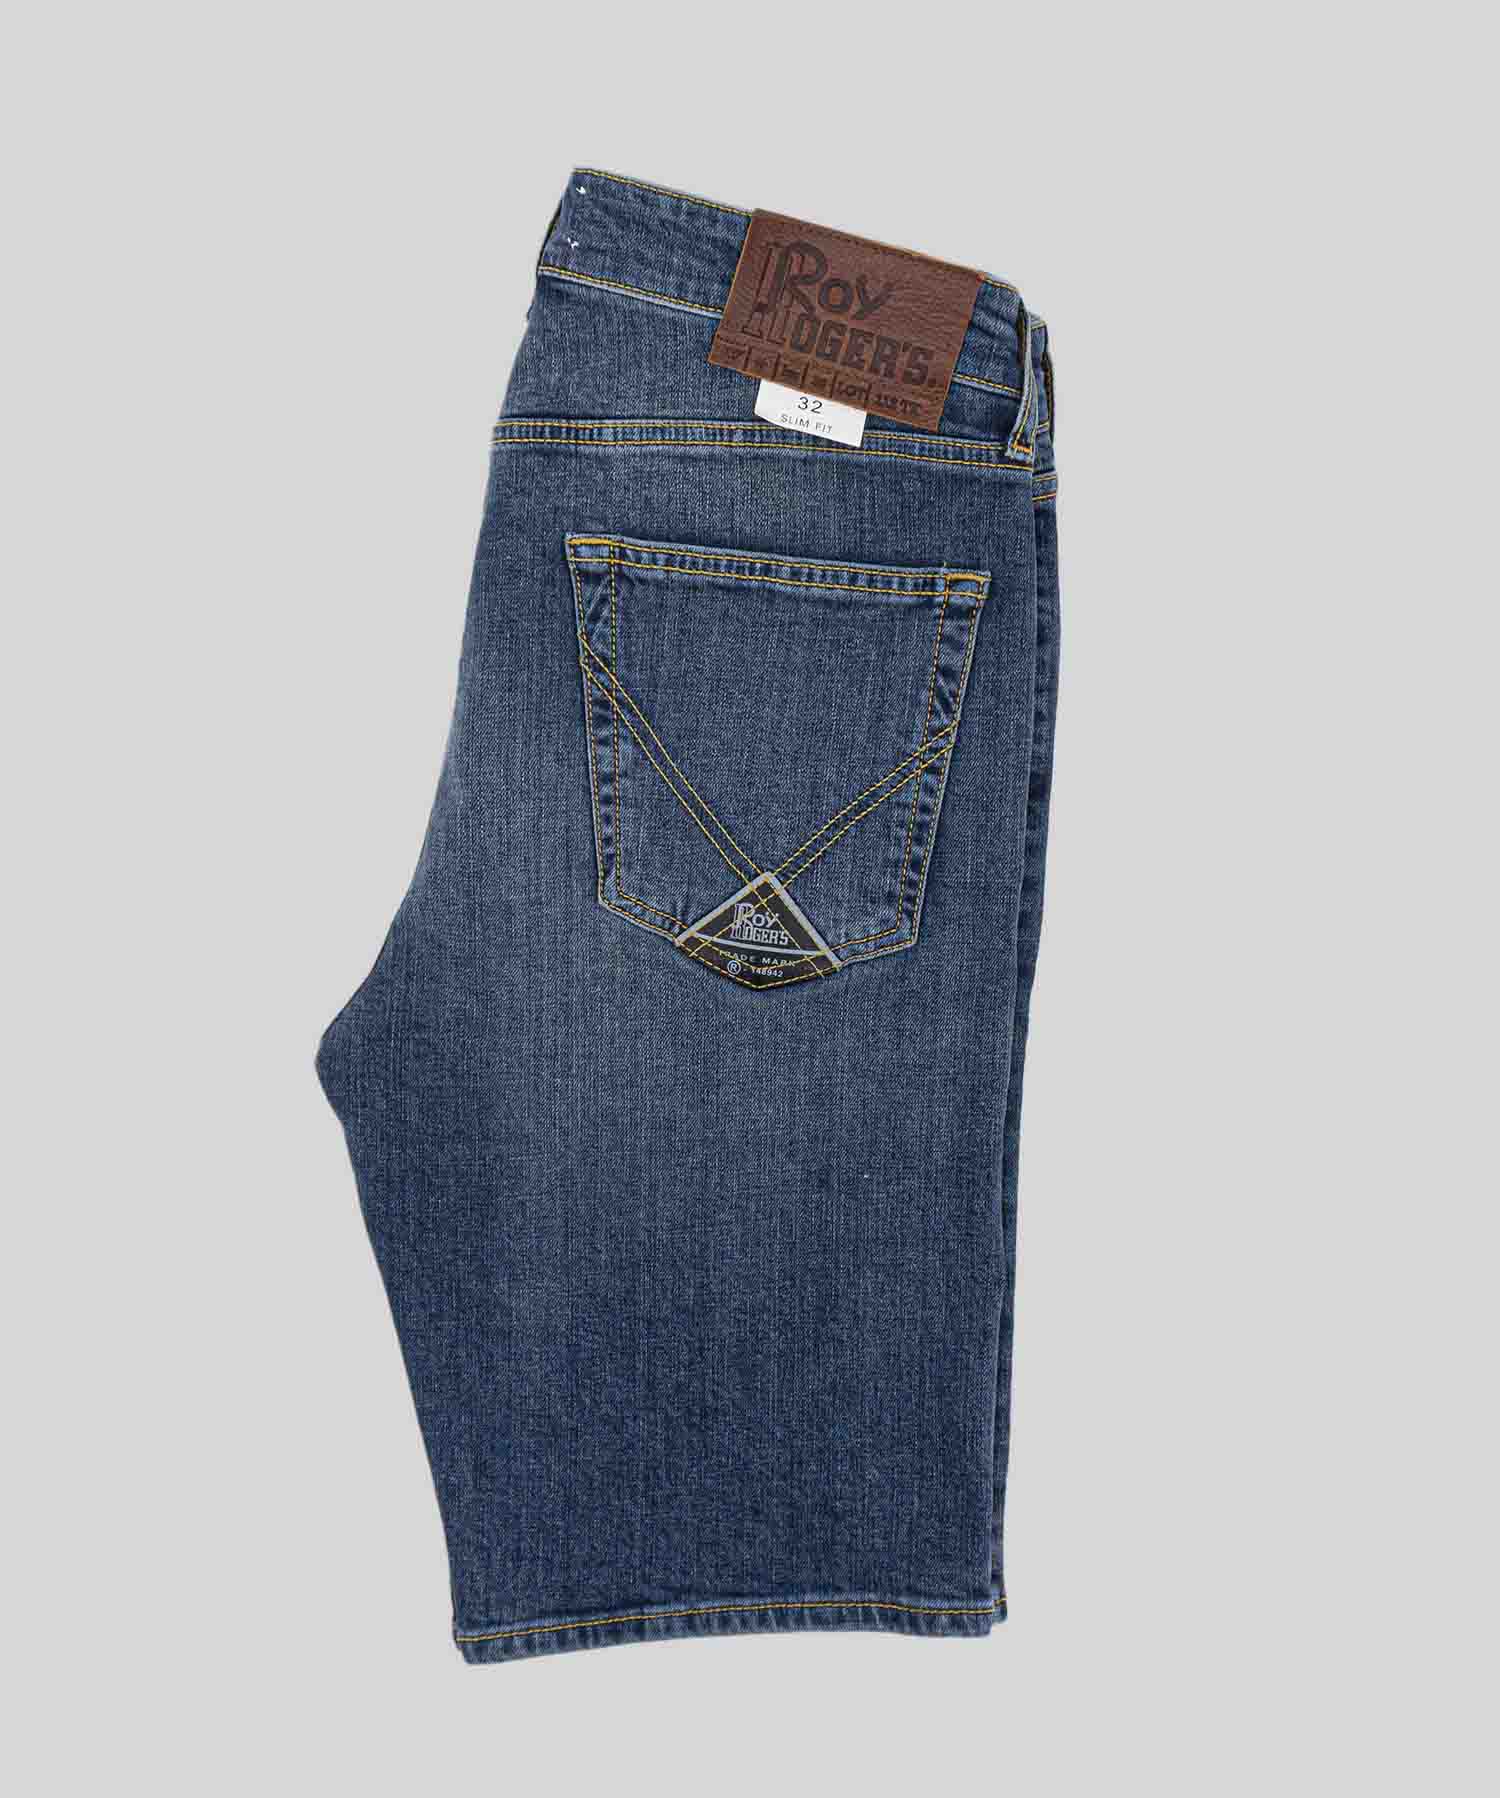 Jeans Bermuda 529 Aperitivo / Jeans - Ideal Moda